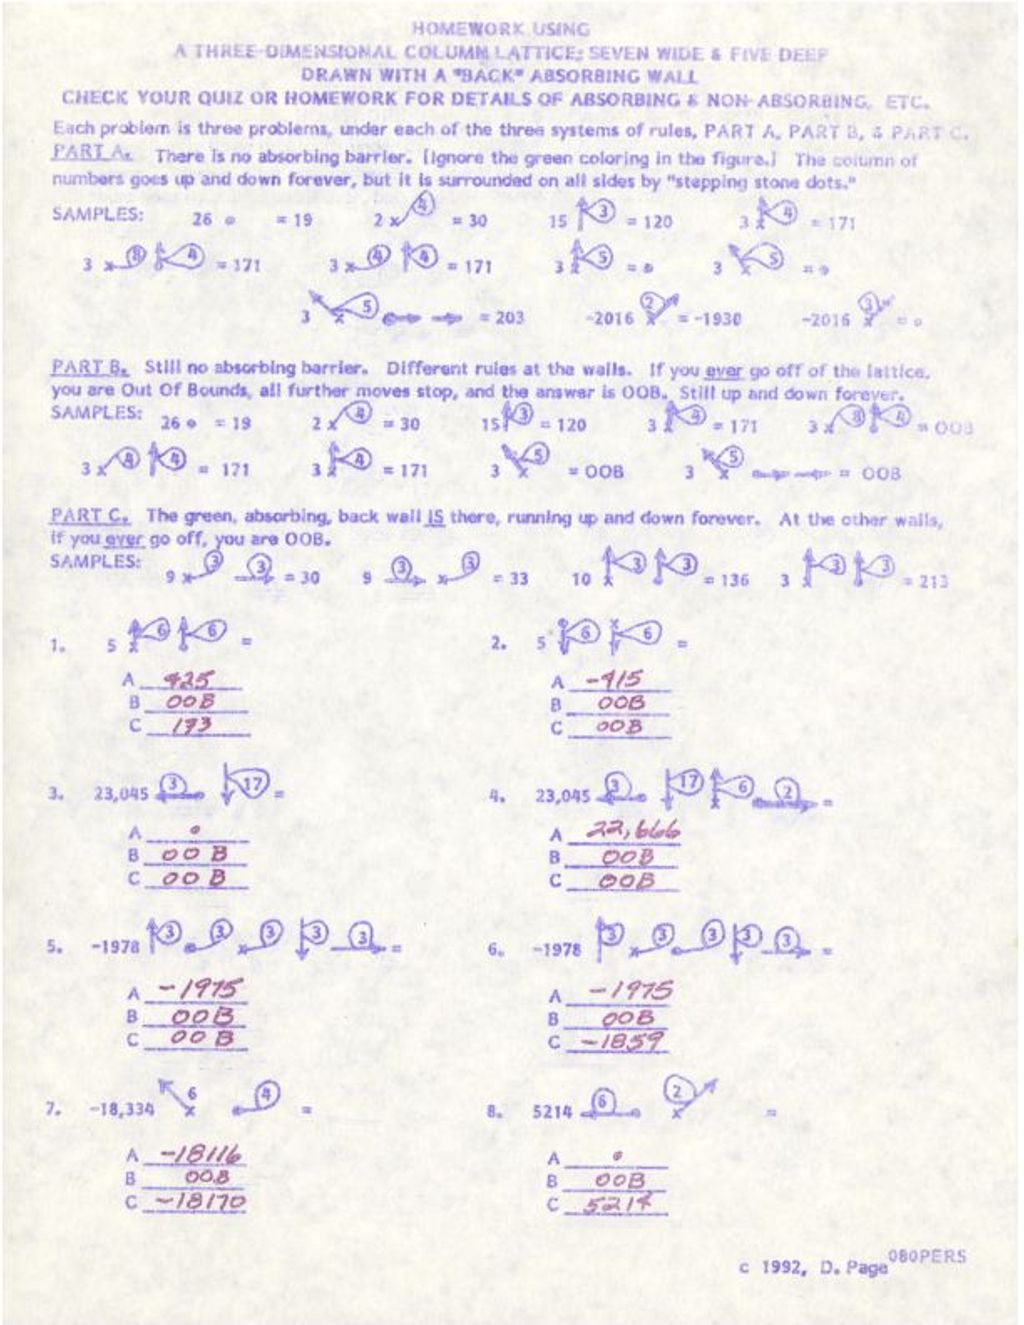 Homework Using a Three Dimensional Column Lattice; Seven Wide and Five Deep Answer Key (1992)